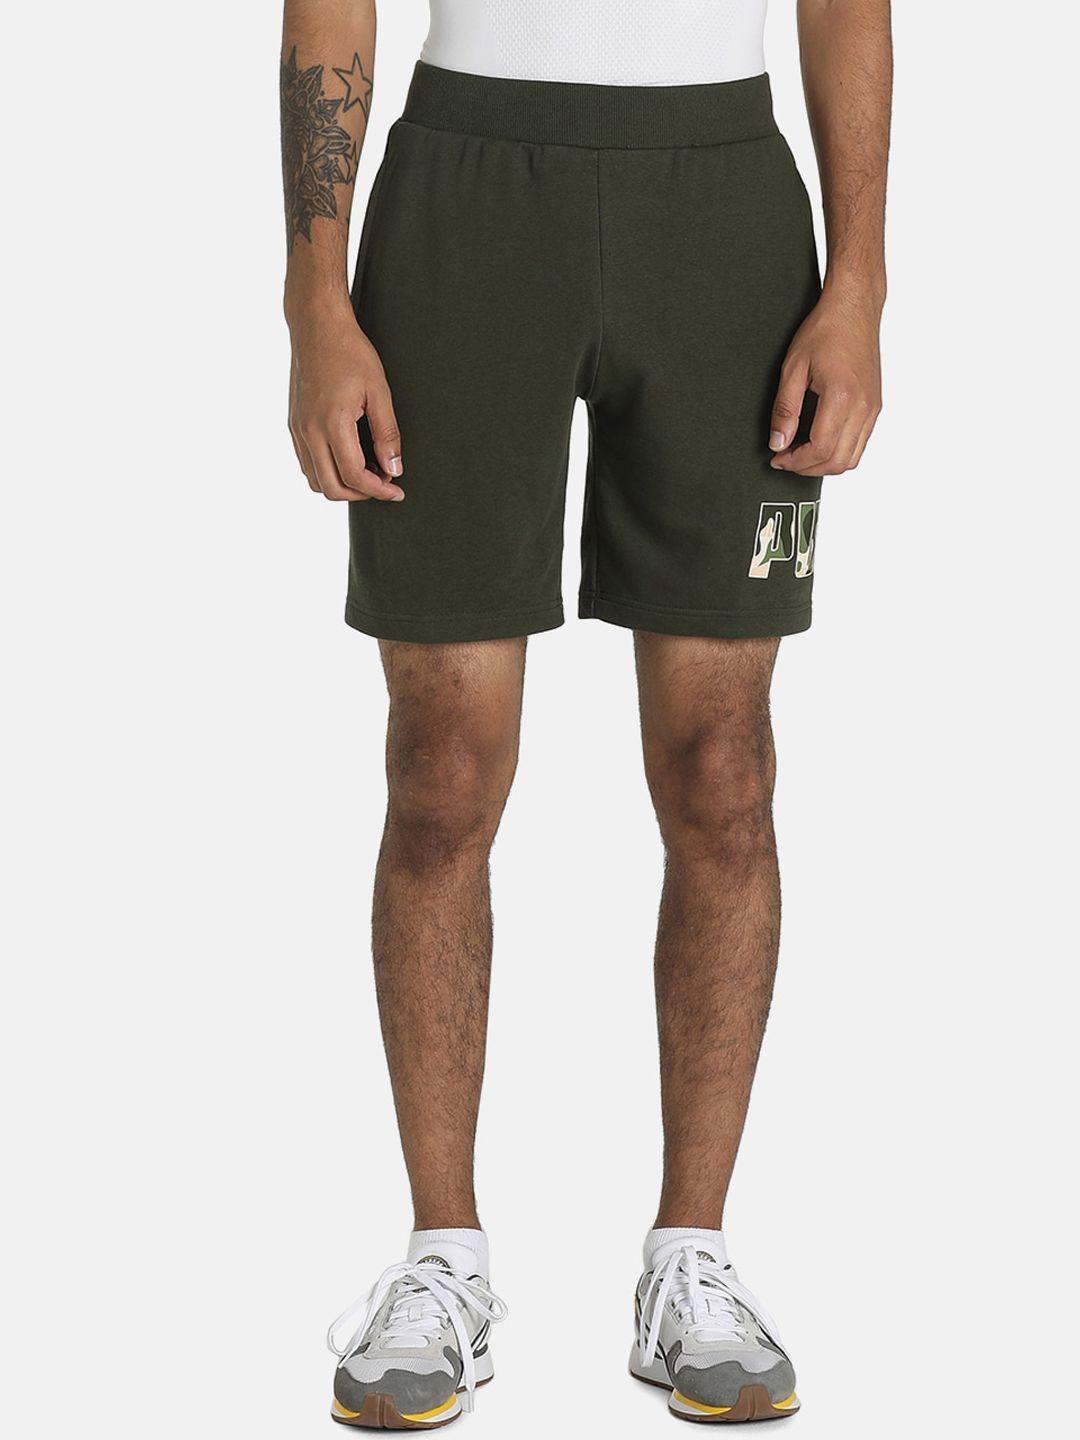 puma-men-olive-green-rebel-camo-typography-printed-sports-shorts